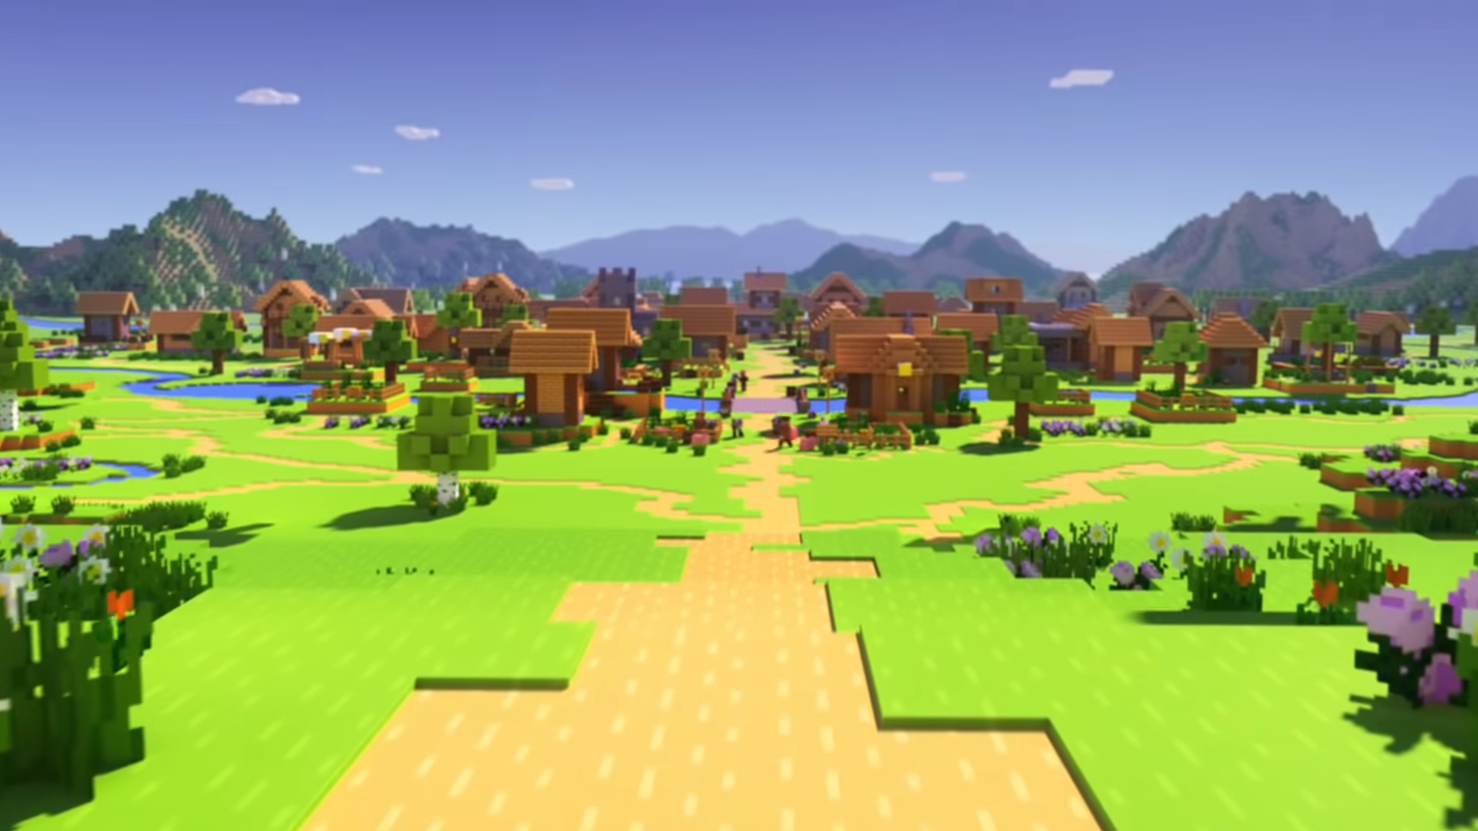 Jalan menuju sebuah desa di kejauhan di Minecraft